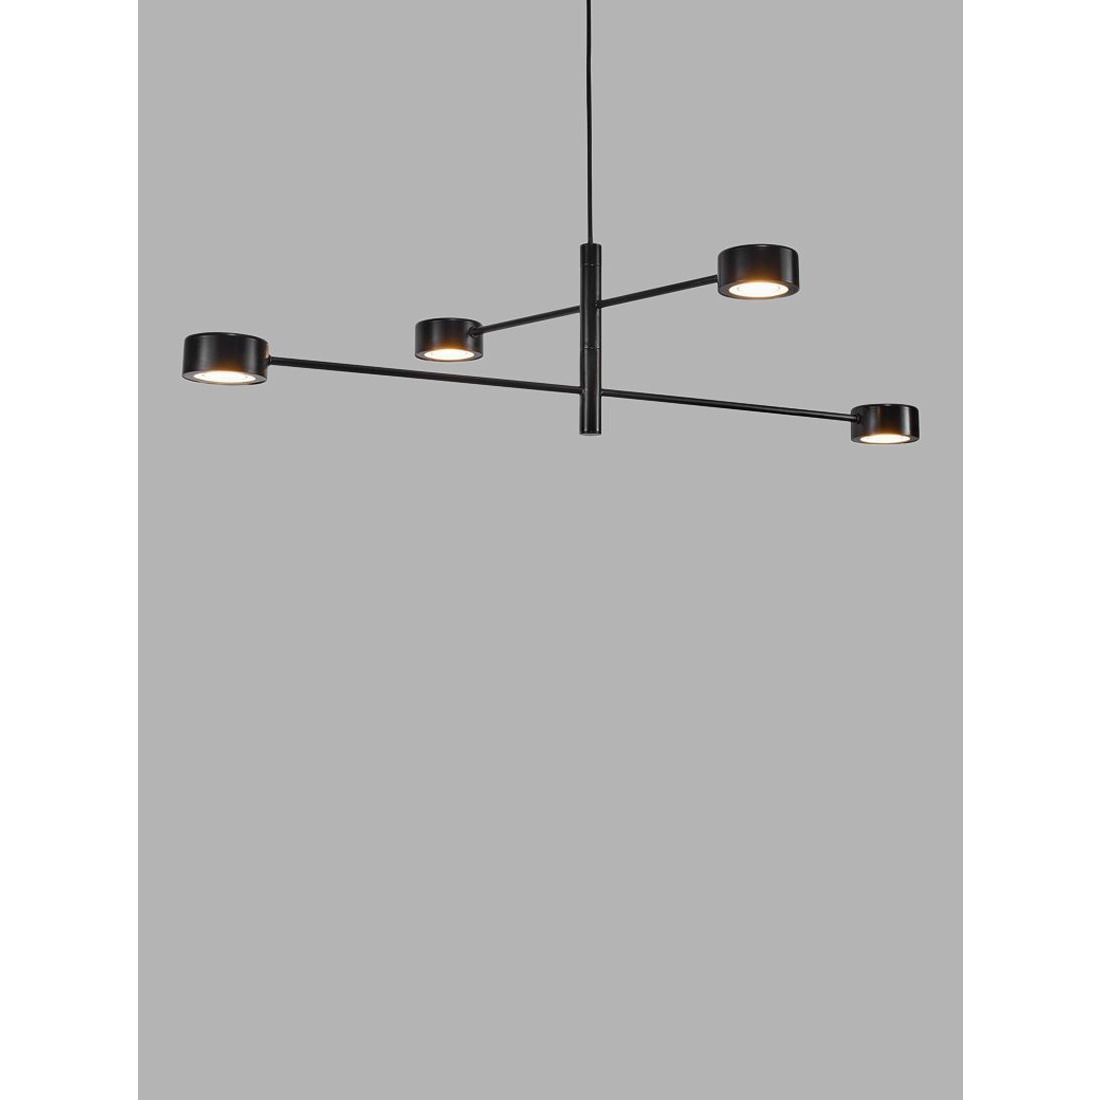 Nordlux Cylde 4 Arm Ceiling Light, Black - image 1